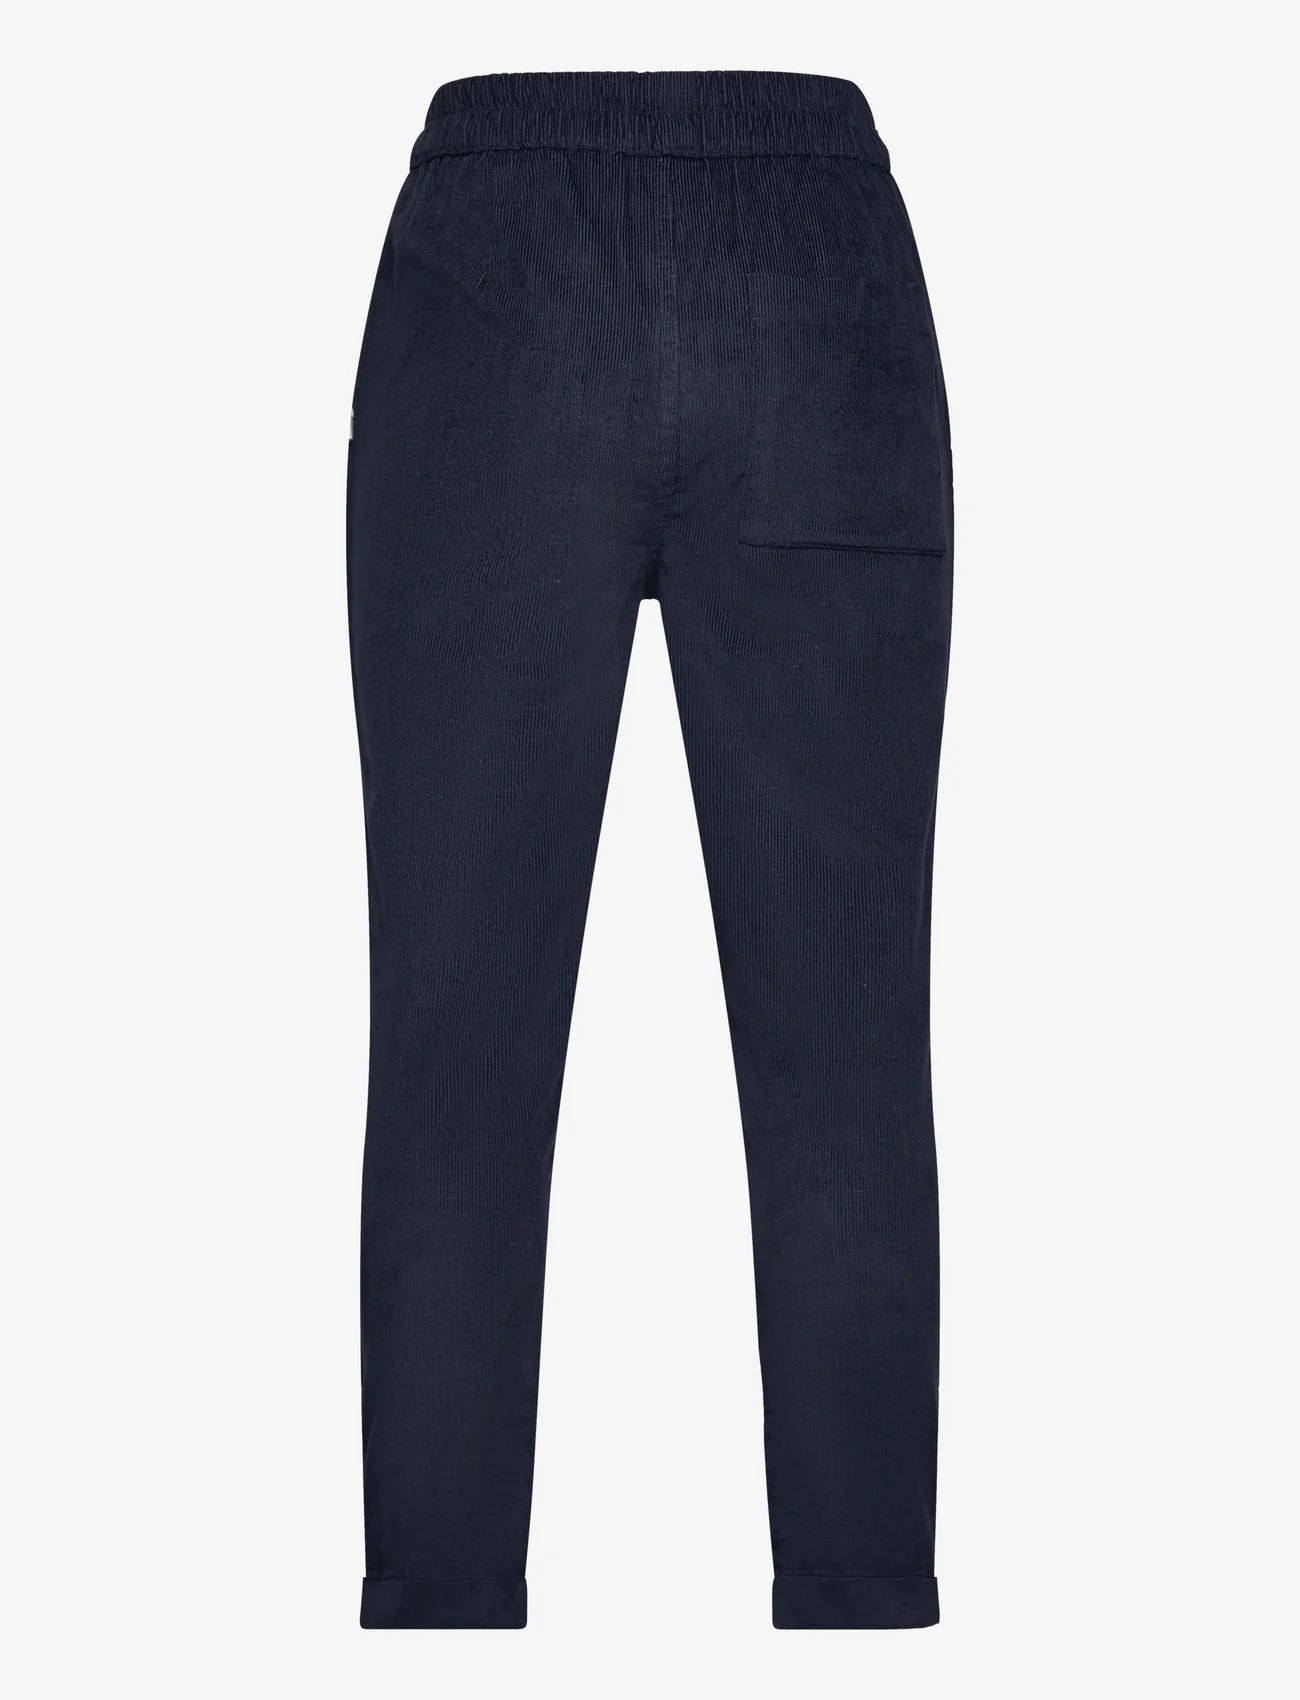 Müsli by Green Cotton - Corduroy pants - spodnie - night blue - 1